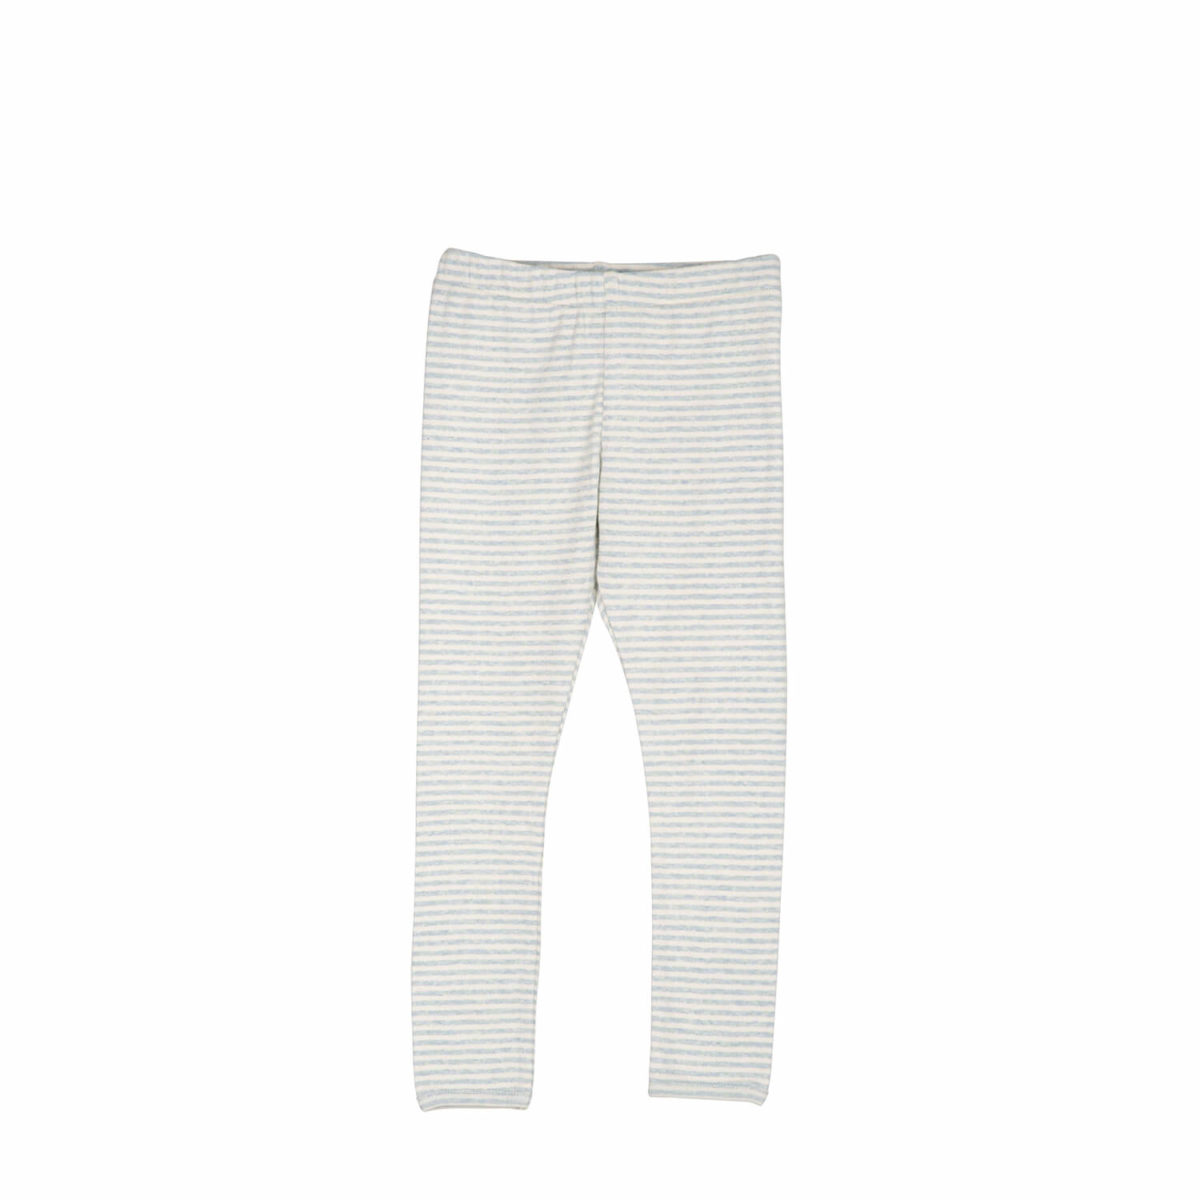 Serendipity - Stripe leggings, cloud/offwhite